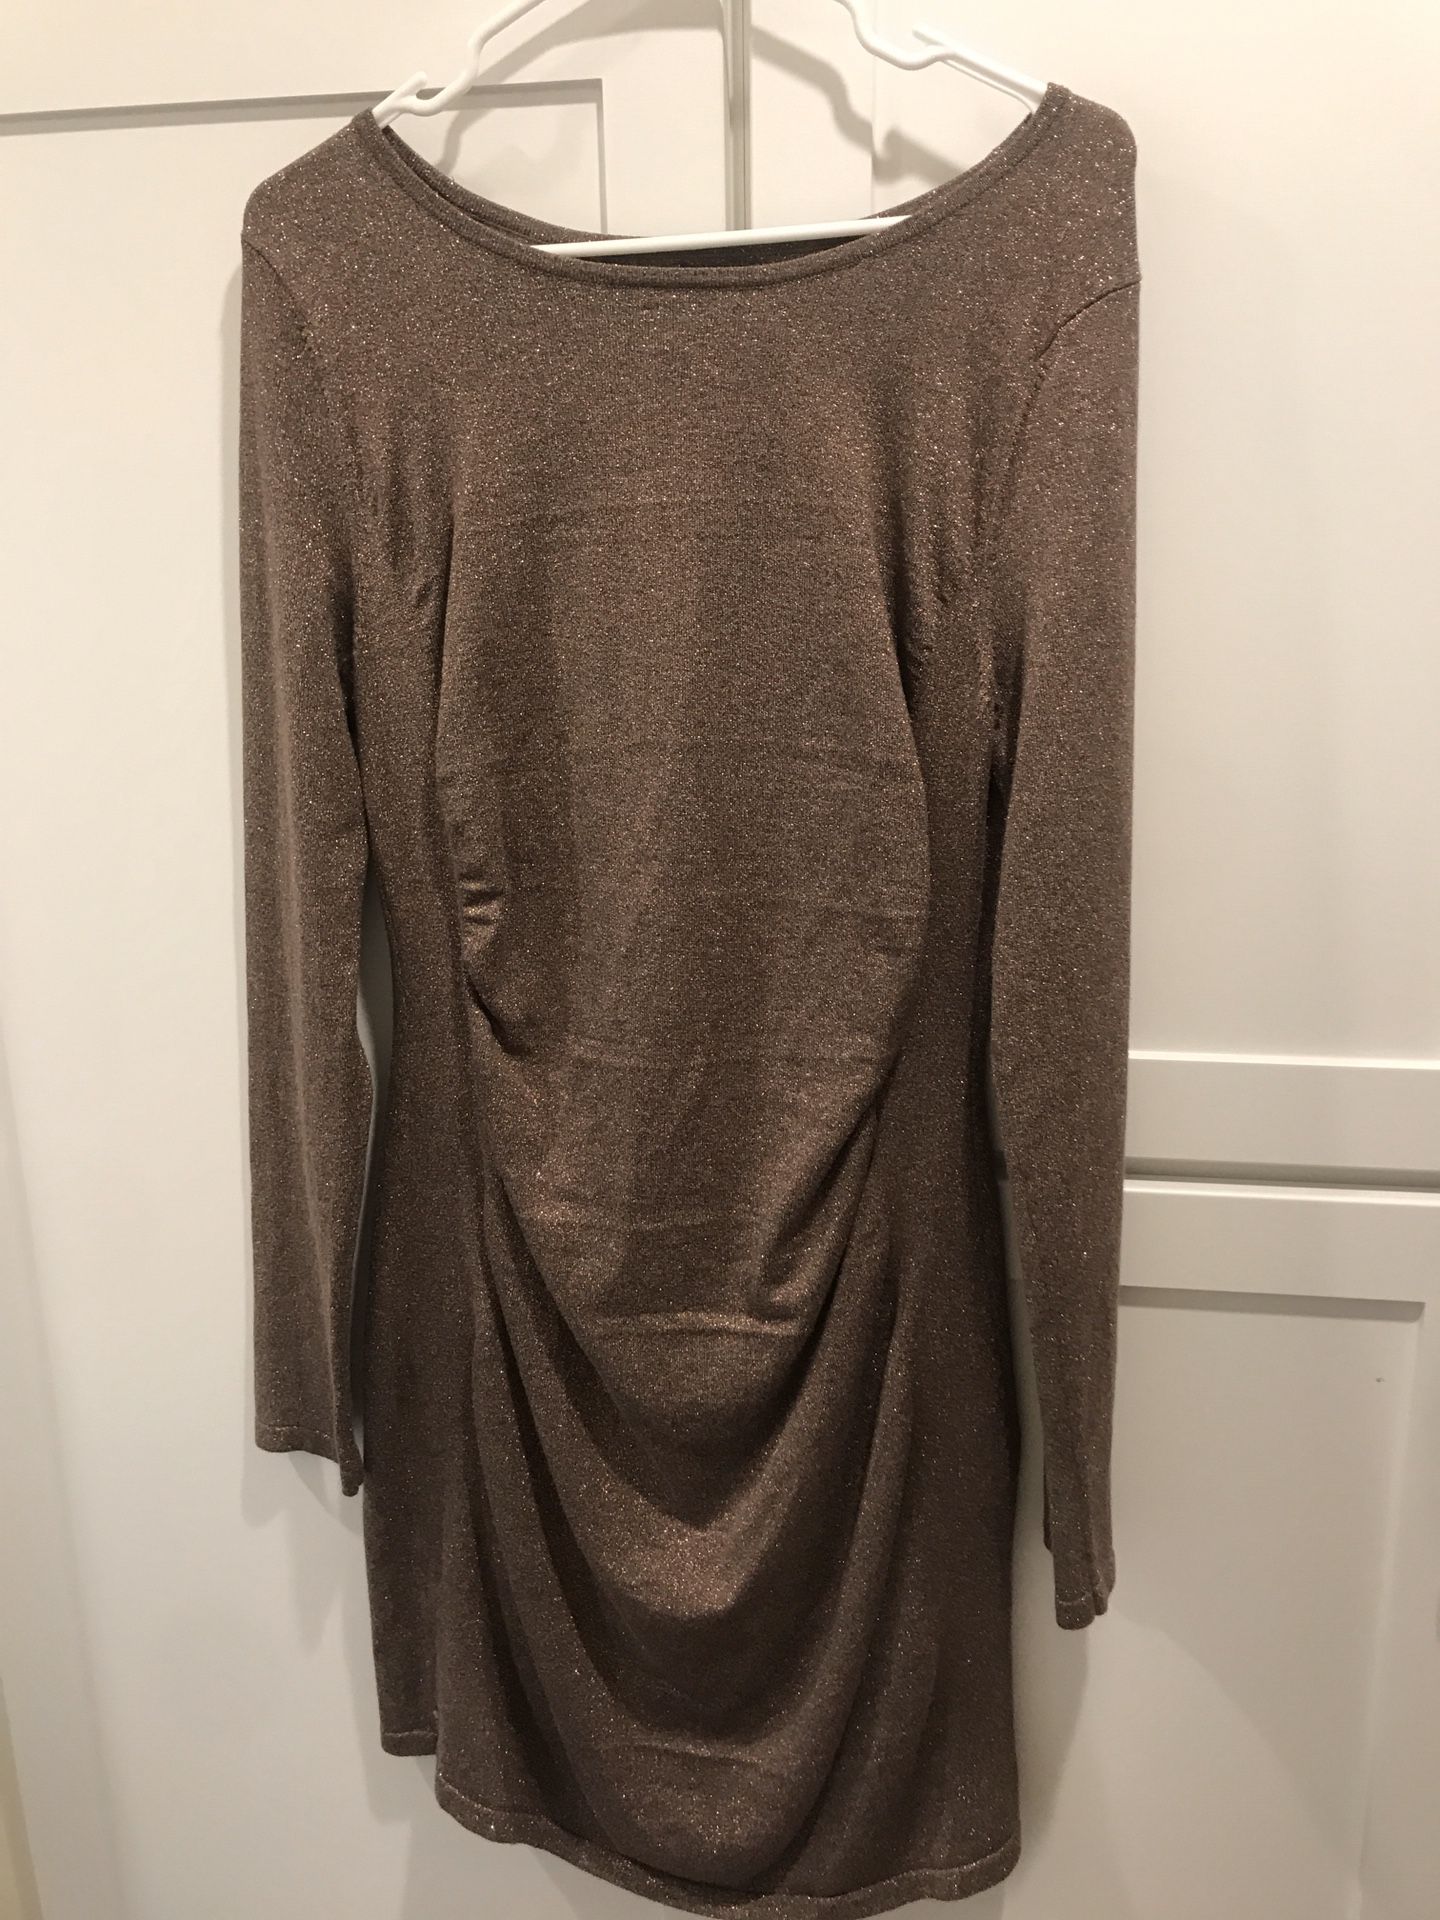 Women’s gold sweater dress- size large